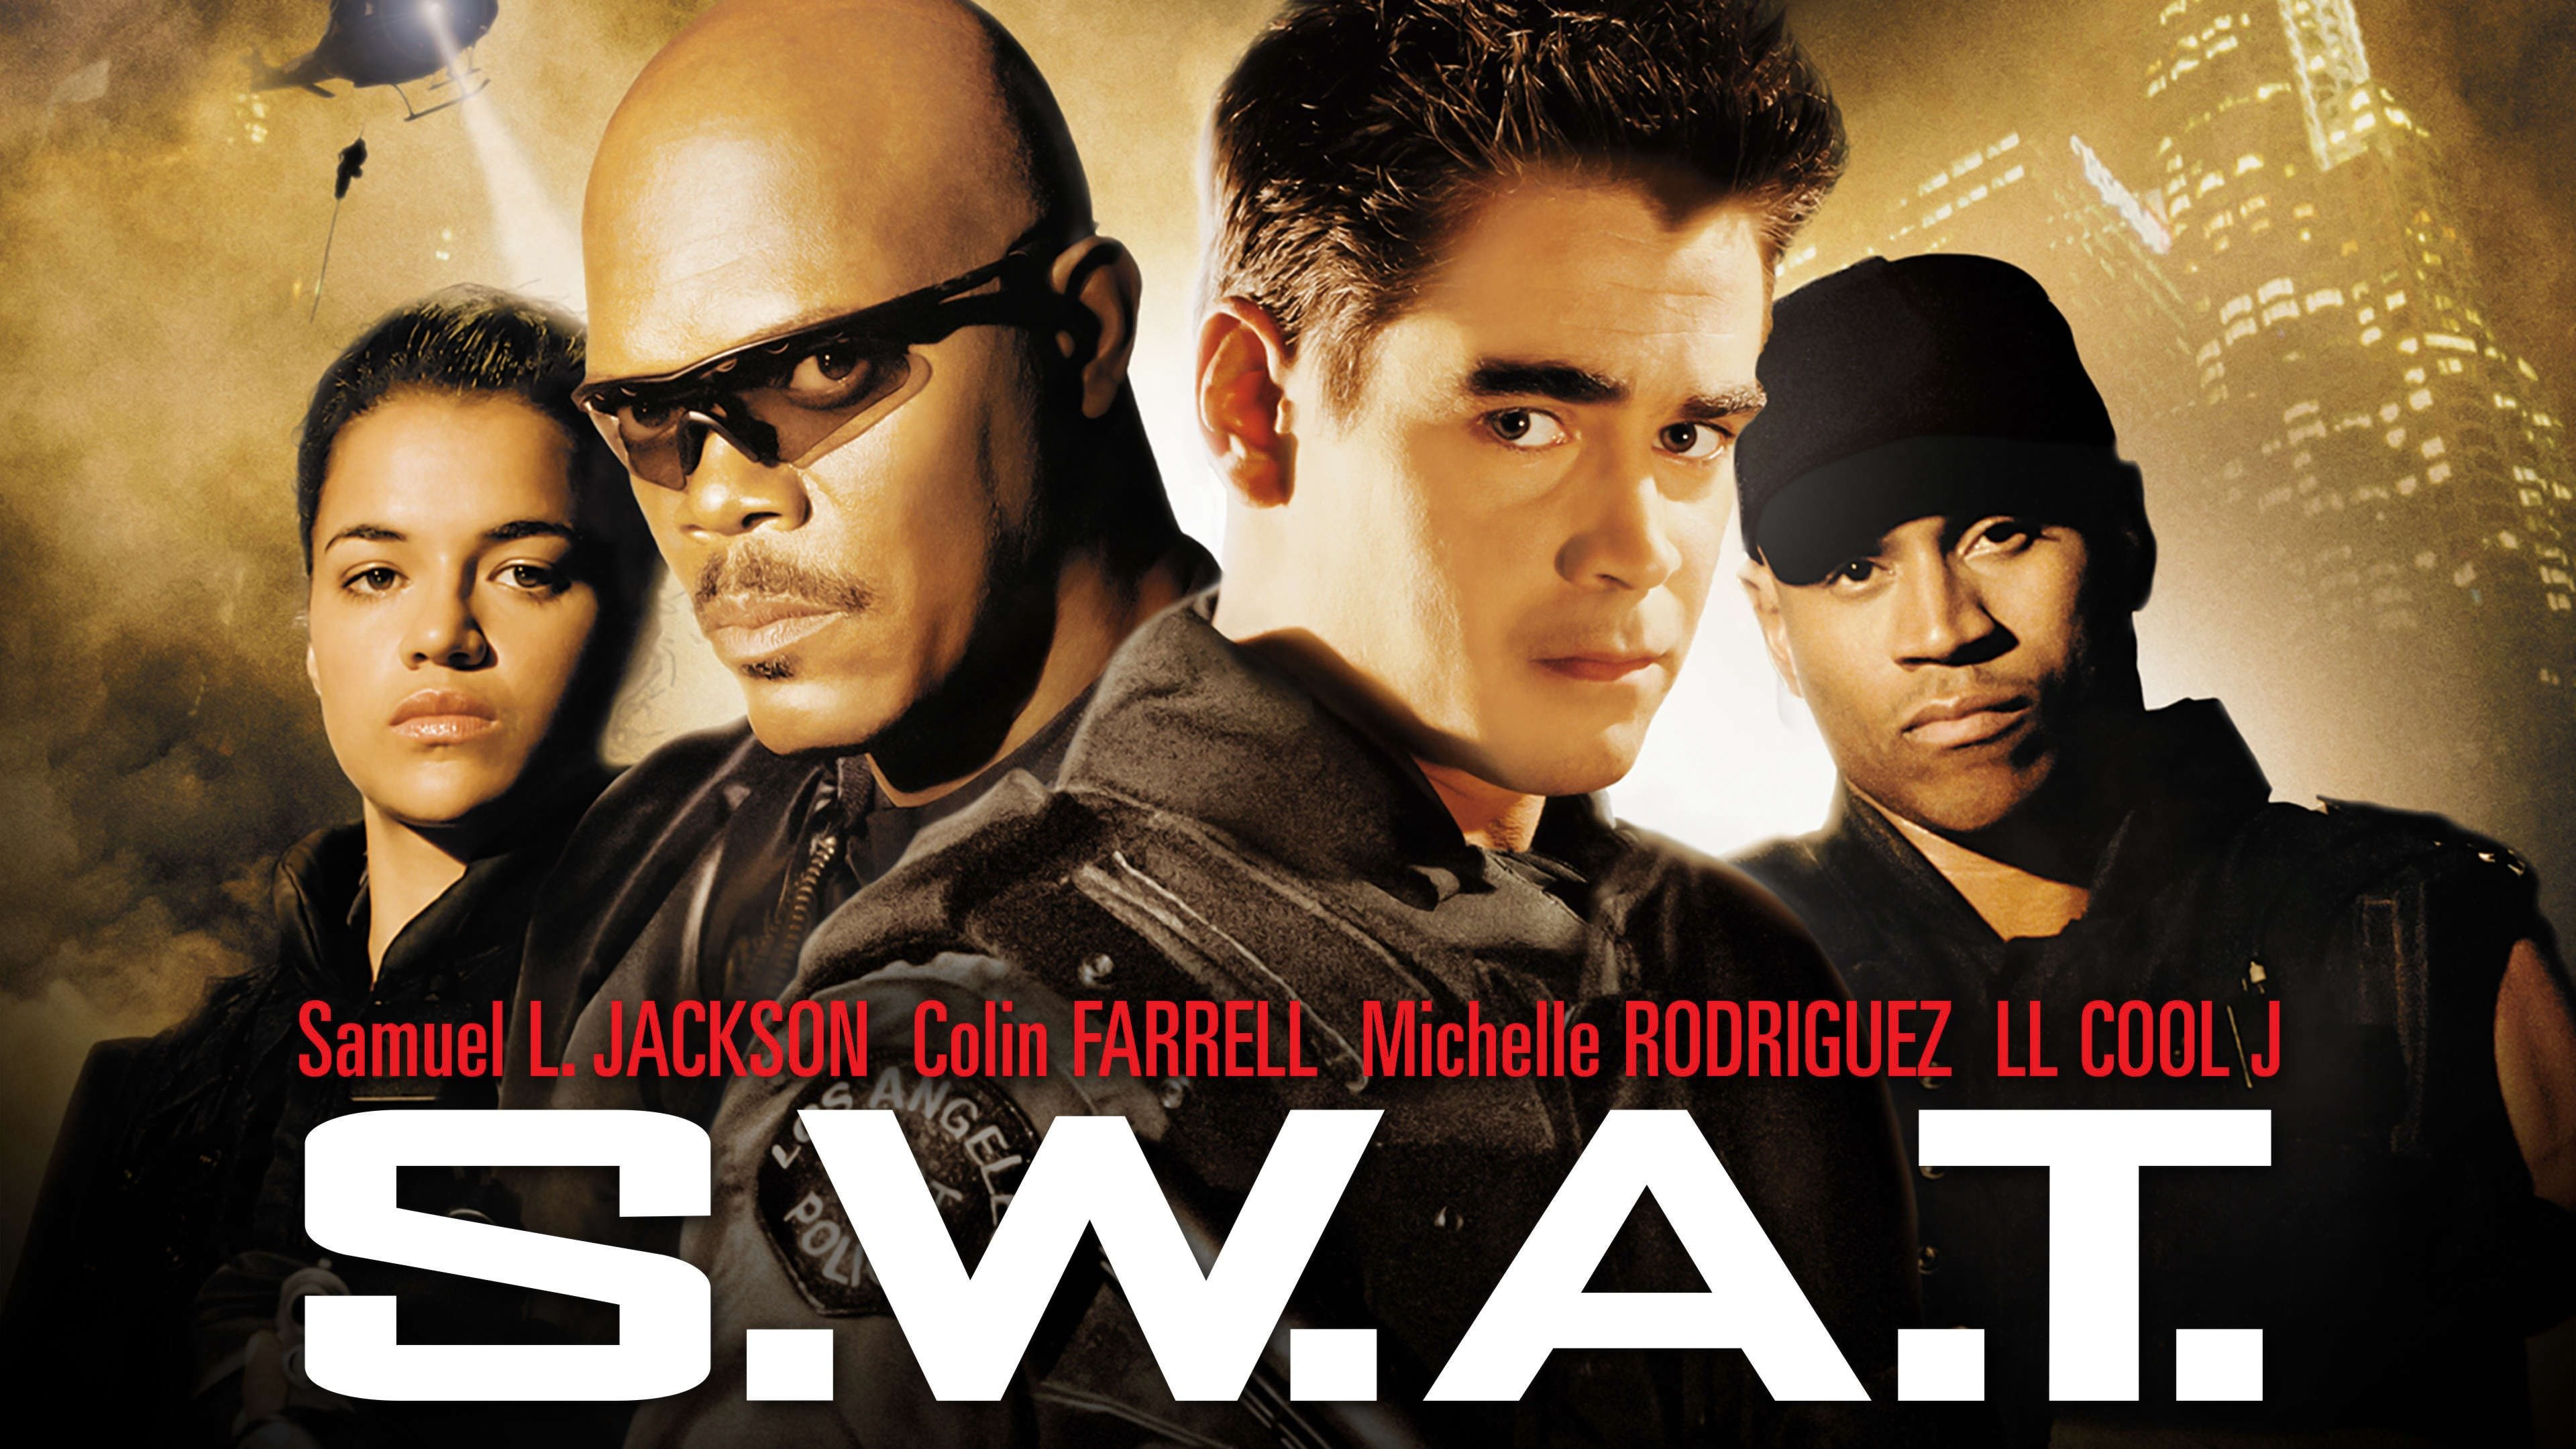 S.W.A.T. / S.W.A.T. (2003)